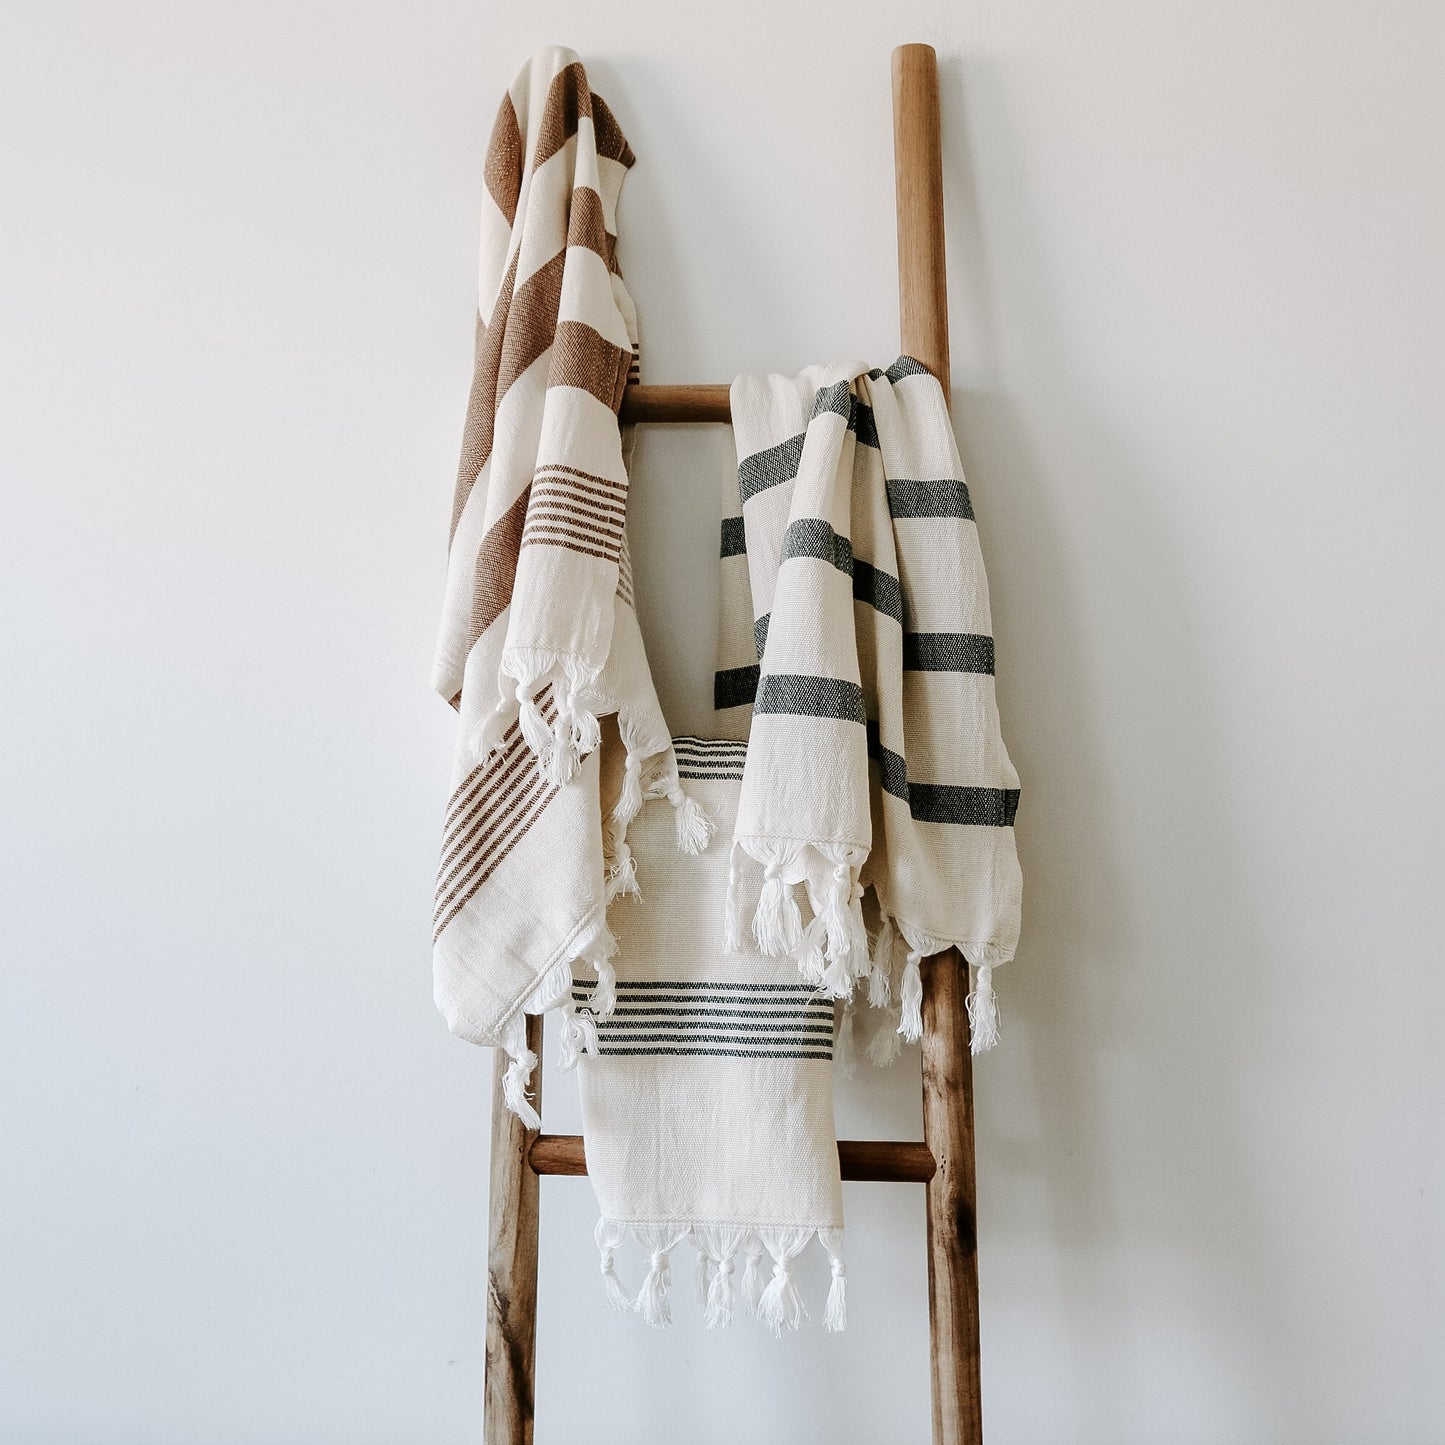 Turkish Cotton + Bamboo Hand Towel - Single Stripe by Sweet Water Decor